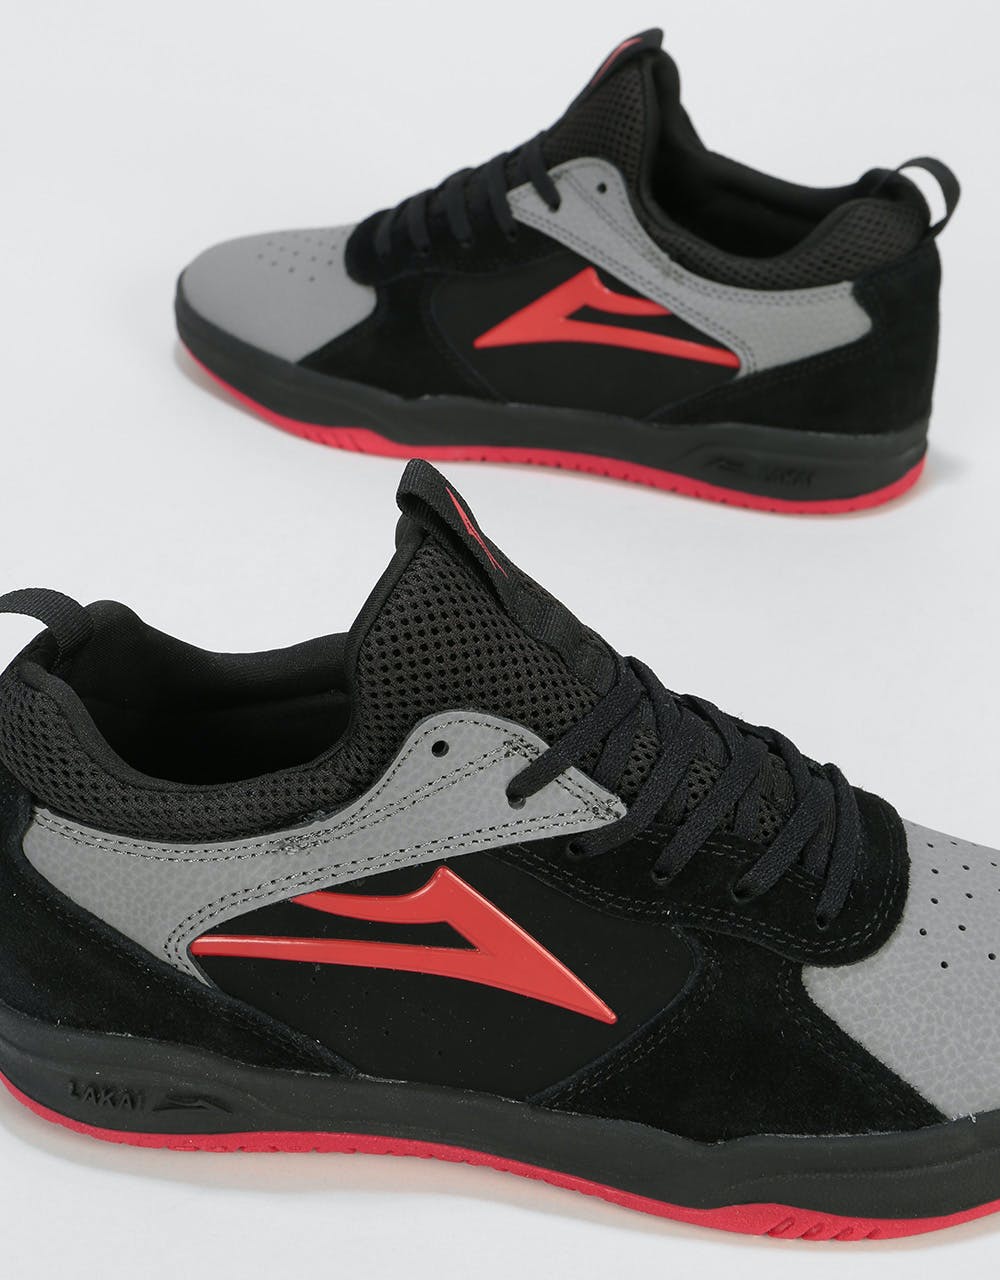 Lakai The Proto Skate Shoes - Black/Grey Suede